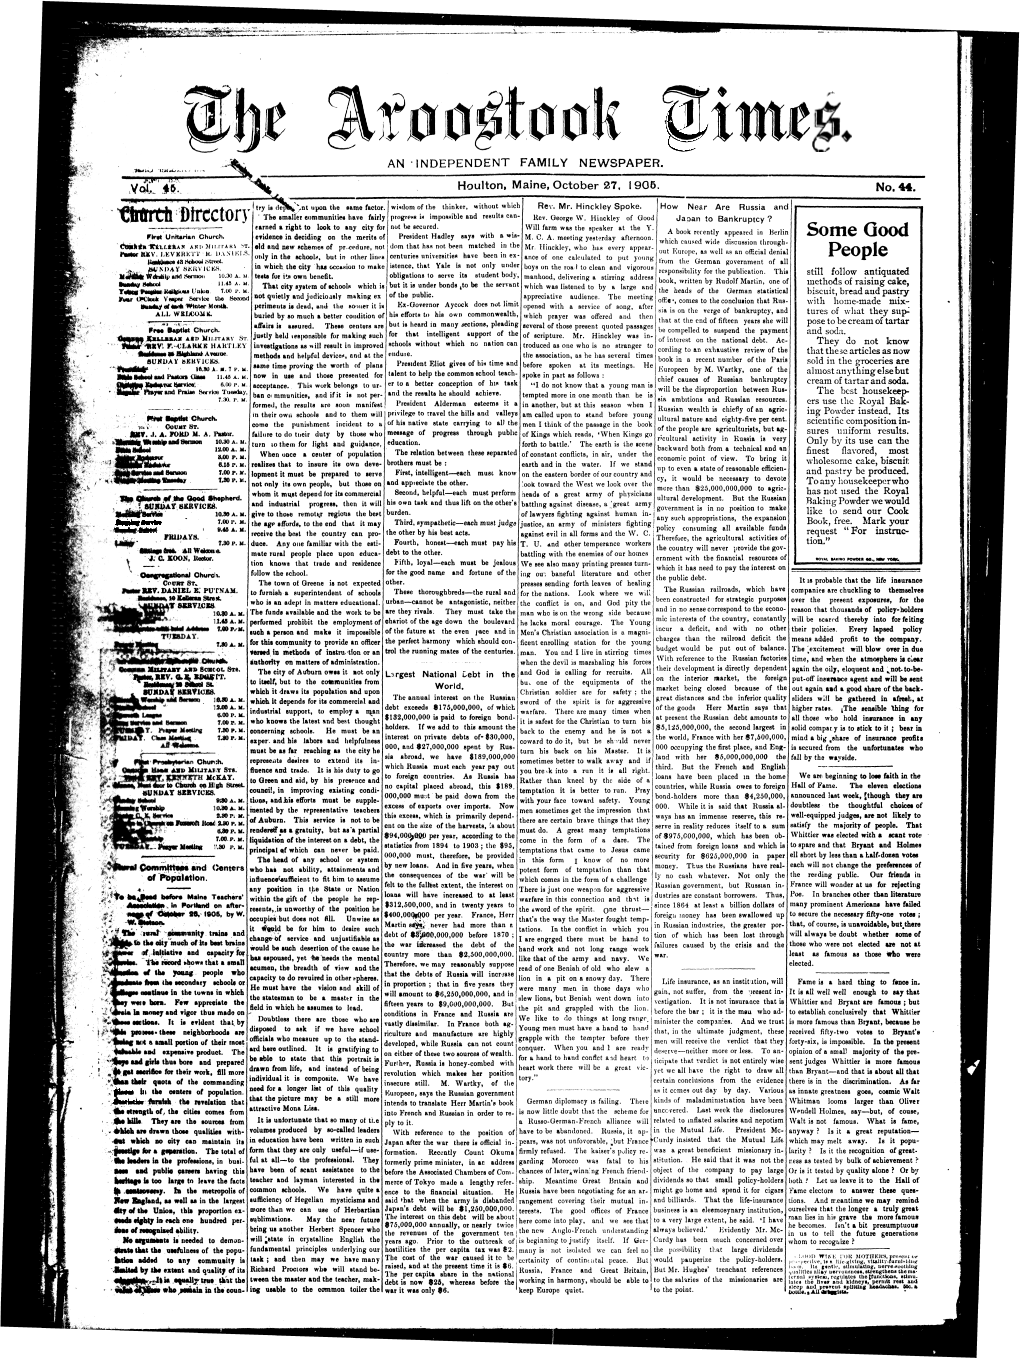 The Aroostook Times, October 27, 1905